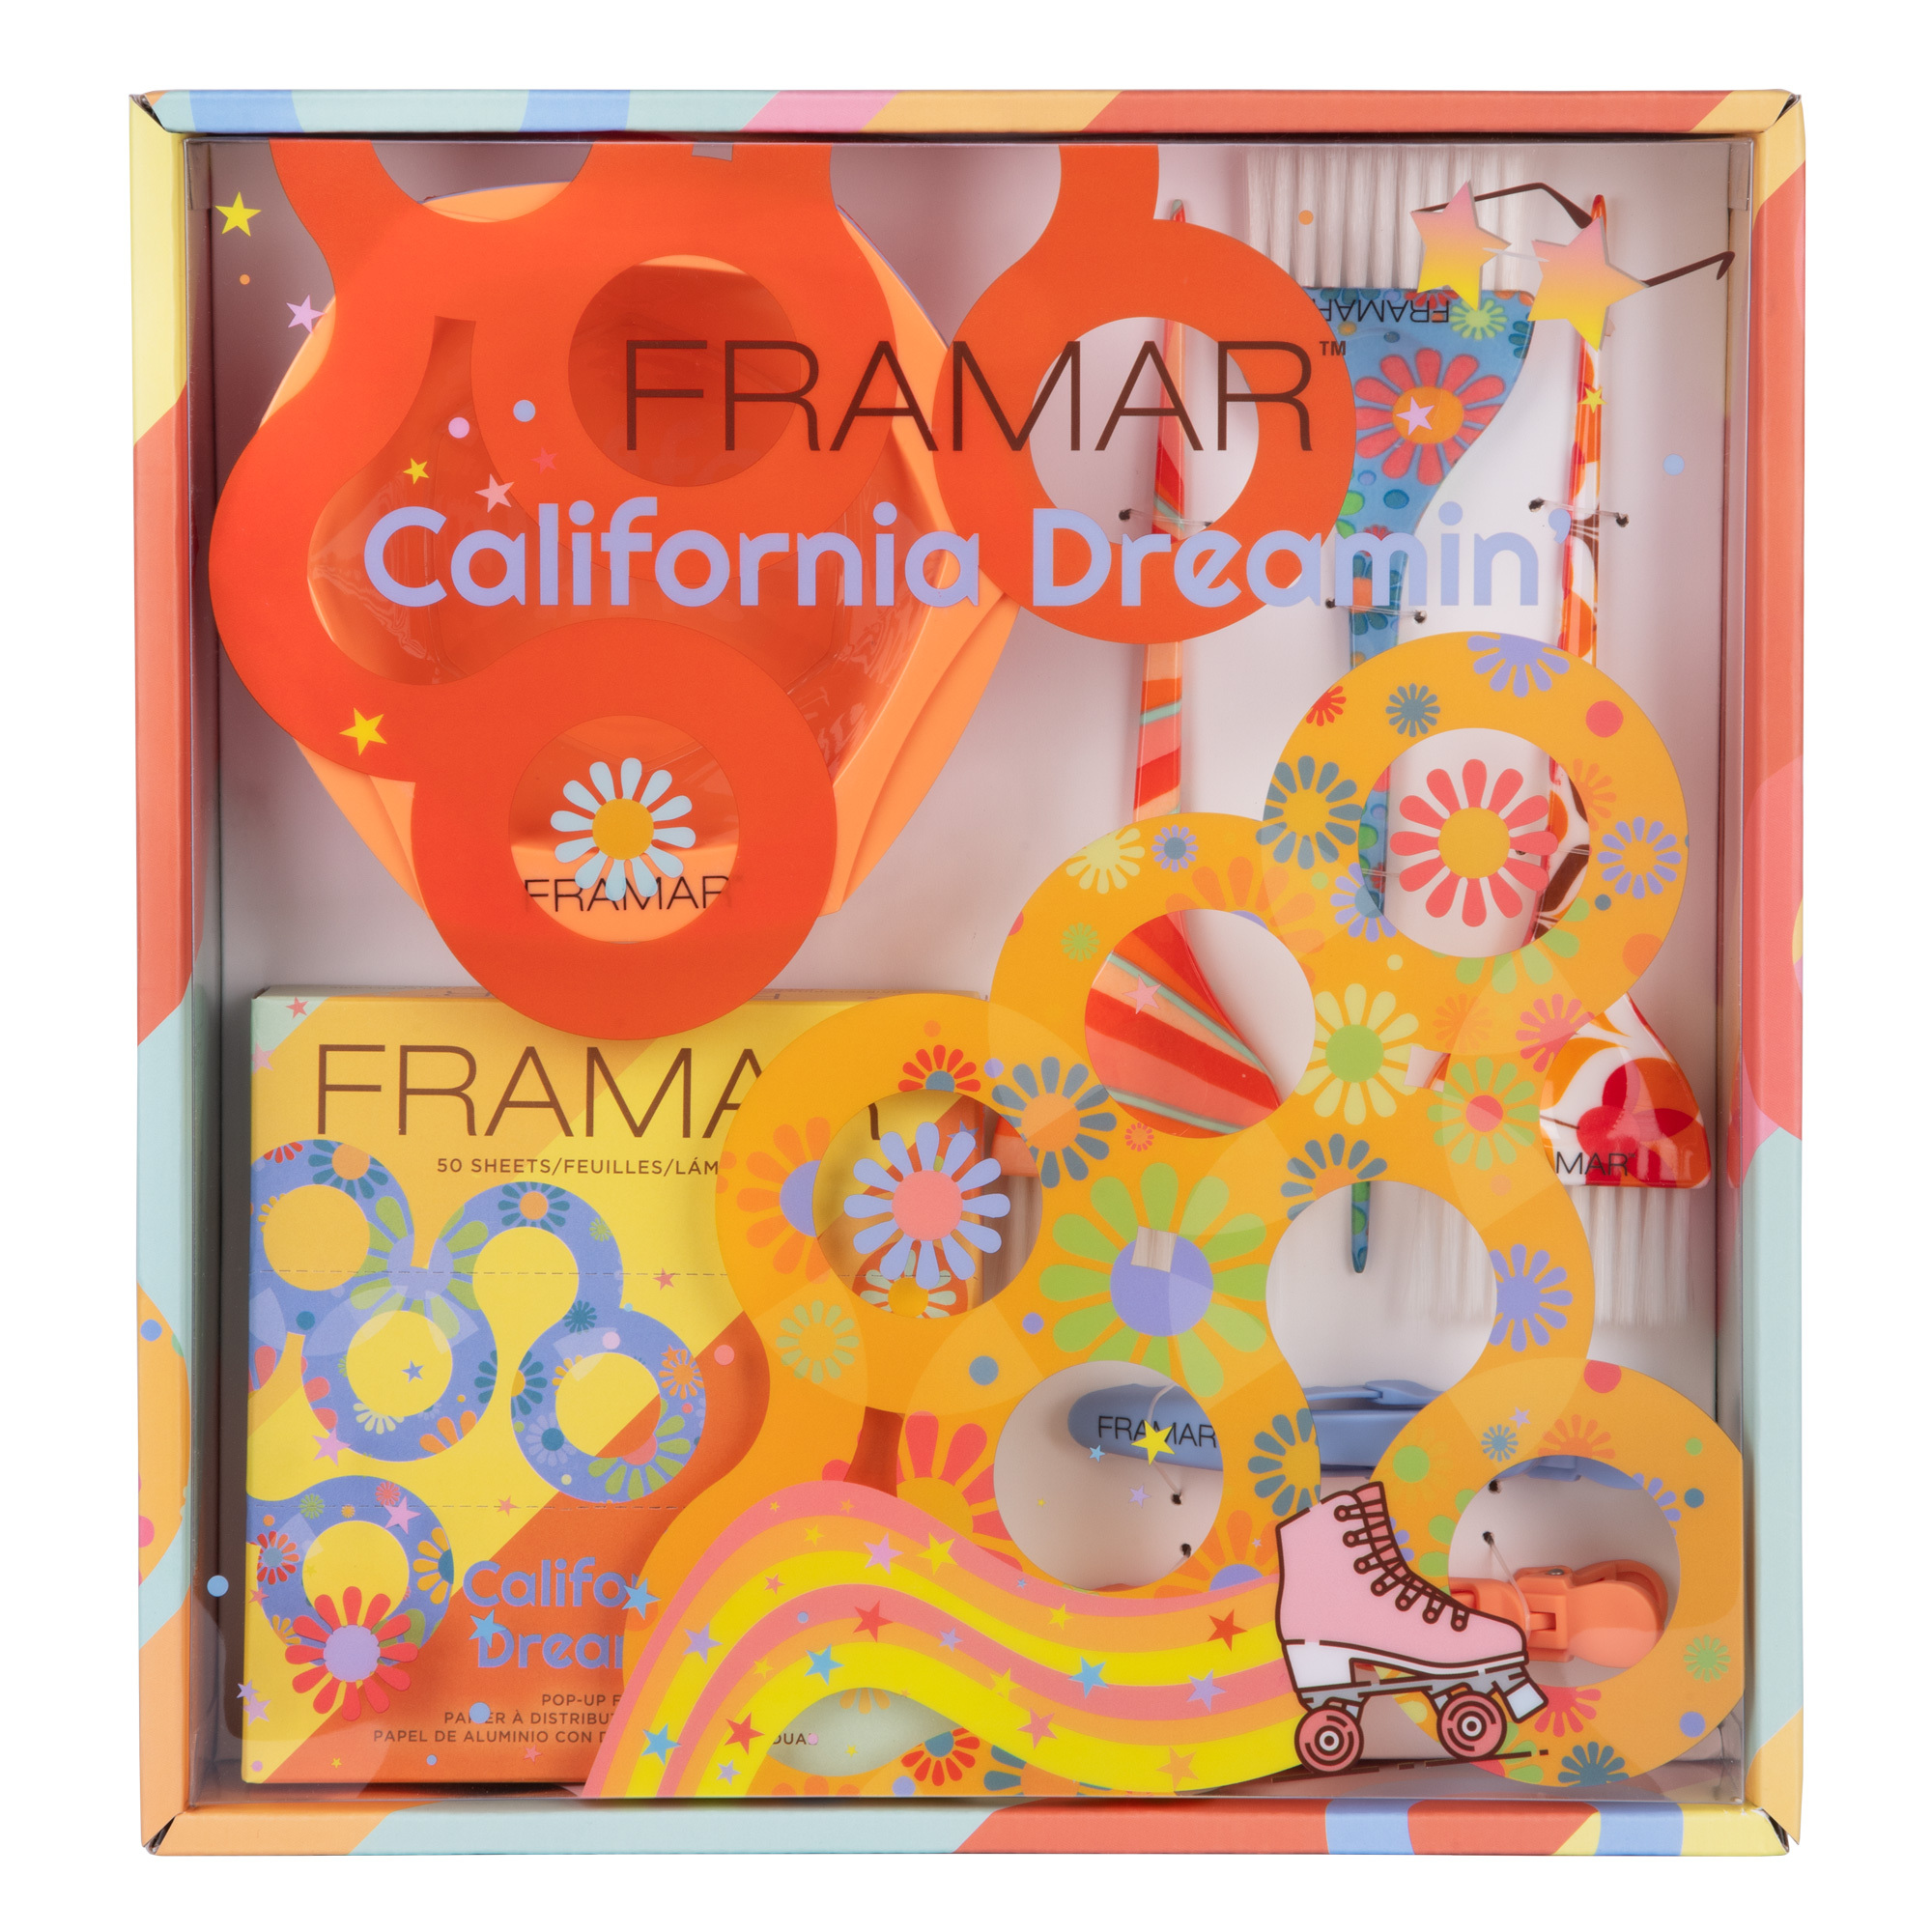 Framar Distributor KITS: California Dreamin' Colorist Kit - 1 kit